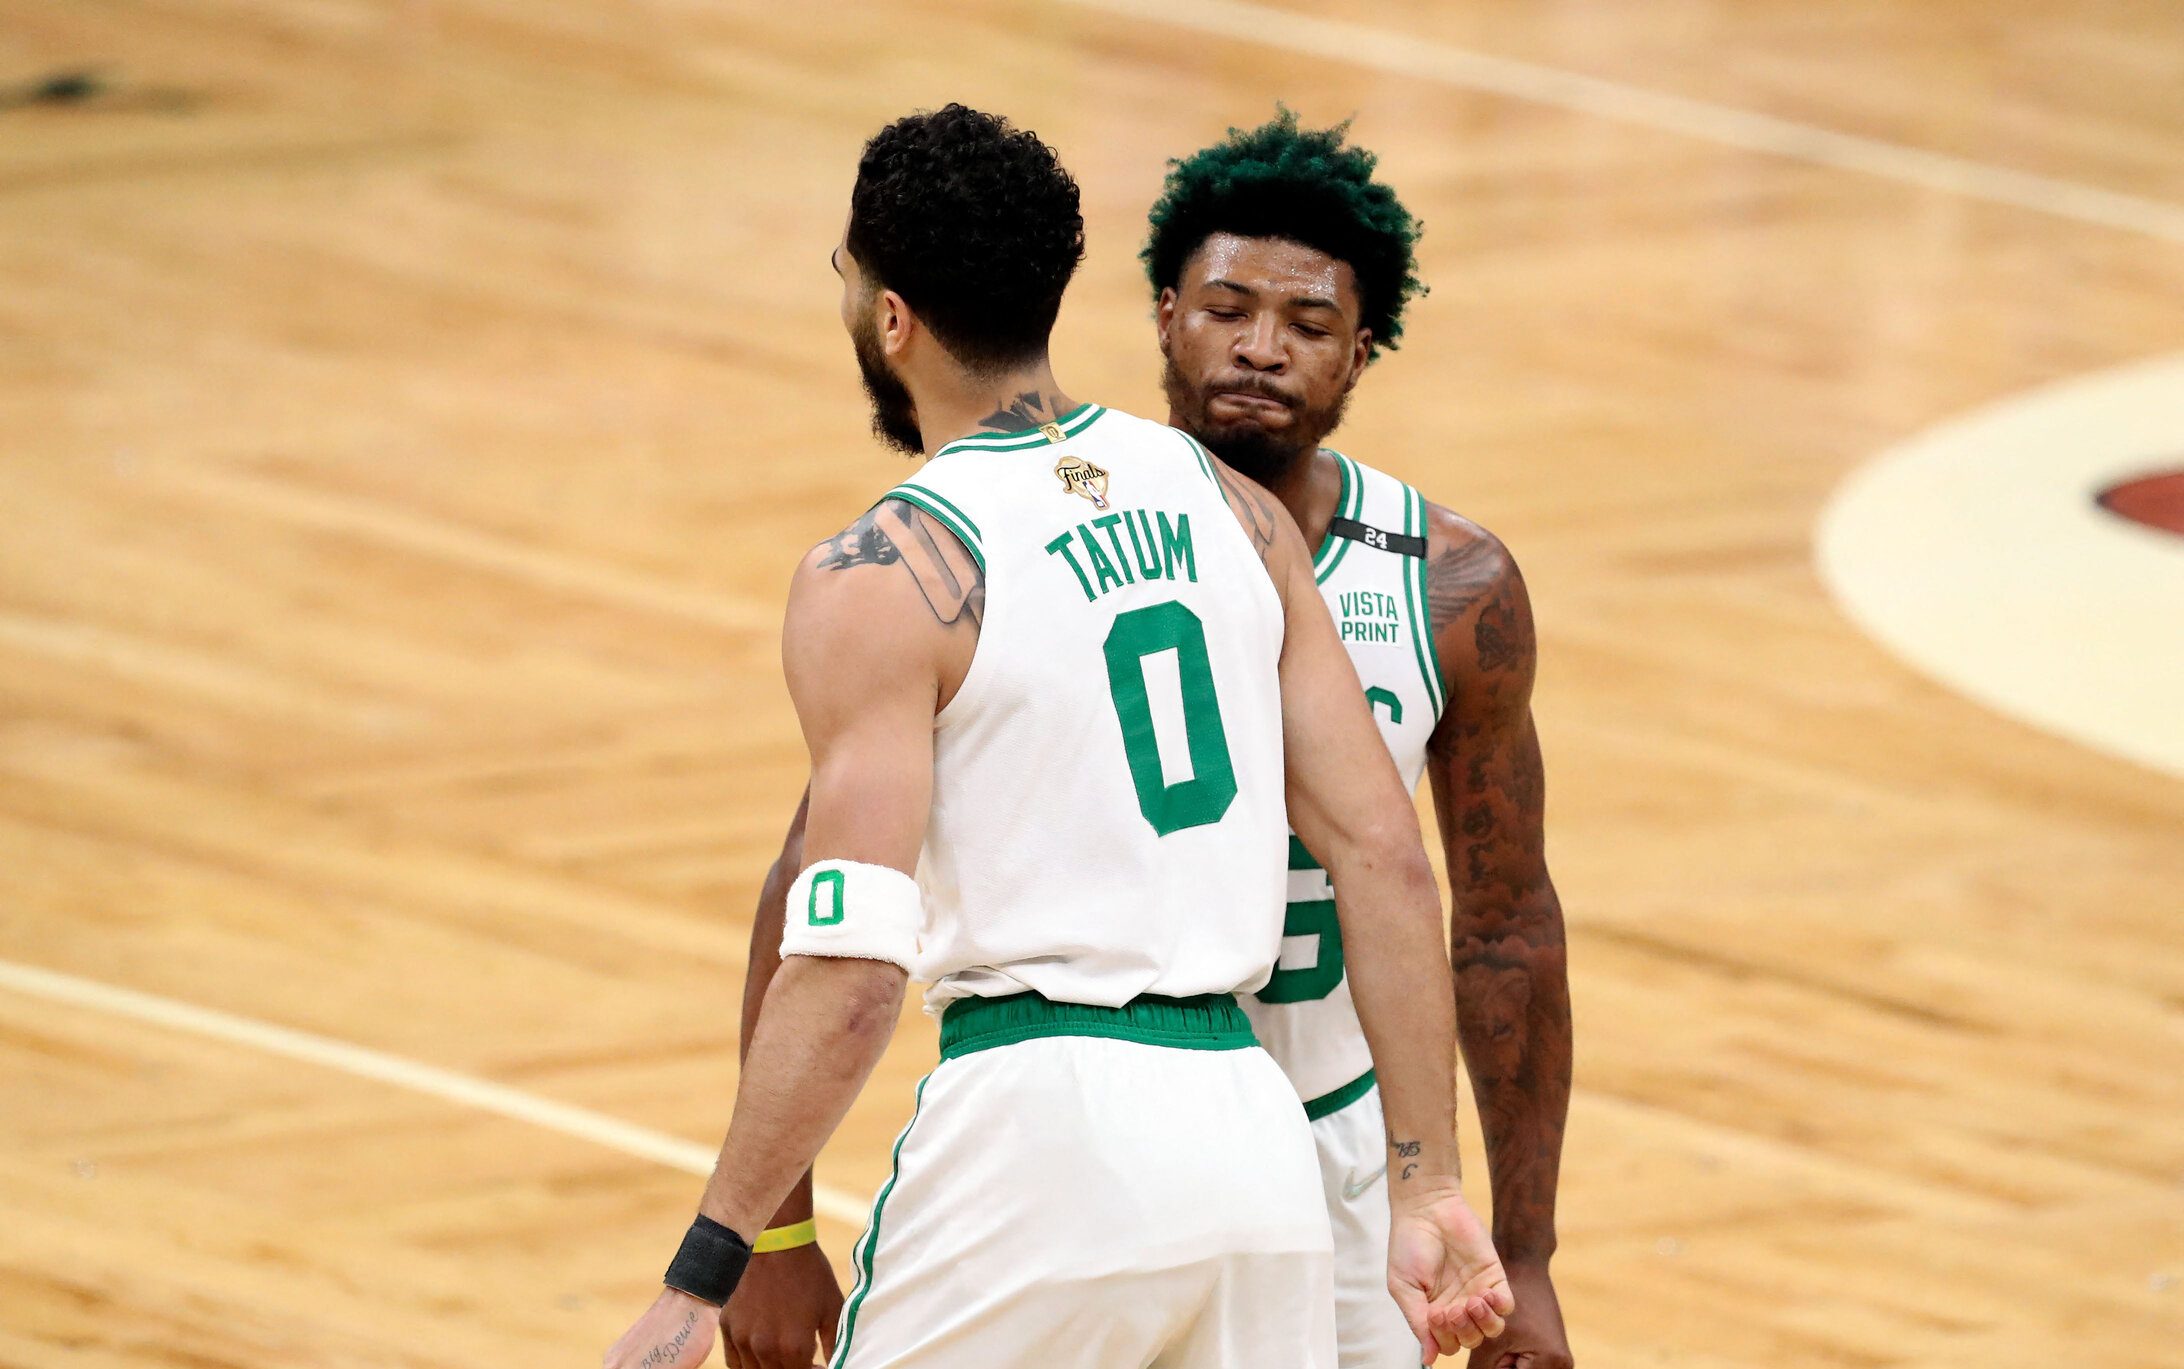 ‘It’s going to hurt’: Despite Finals letdown, Celtics see bright future